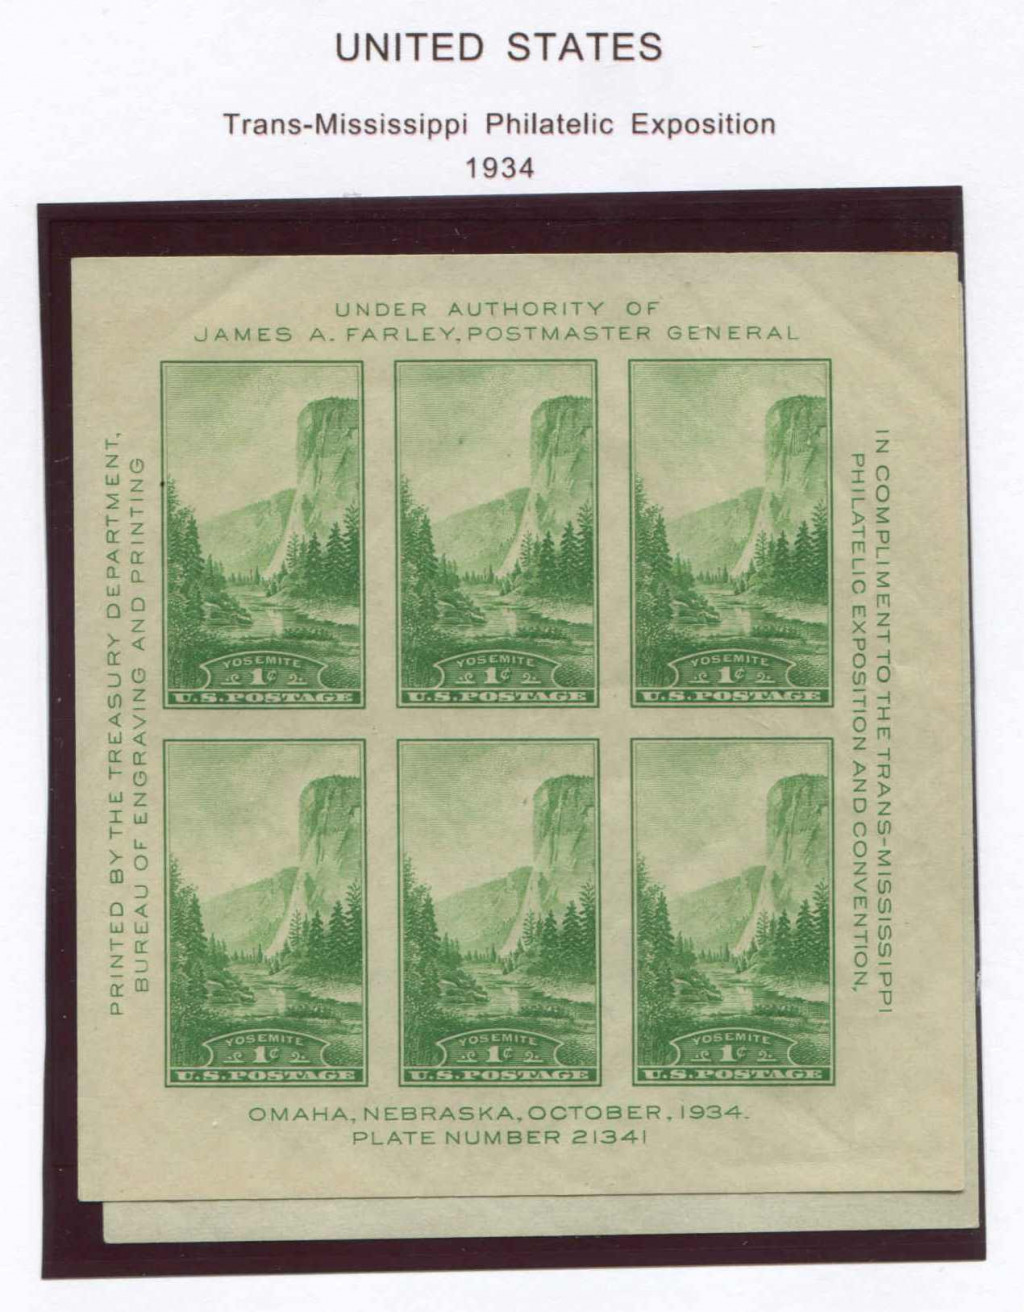 Scott Identification Guide of Us Regular Issue Stamps 1847-1934, 7th  Edition: Scott Identification Guide of Us Regular Issues Stamps (Paperback)